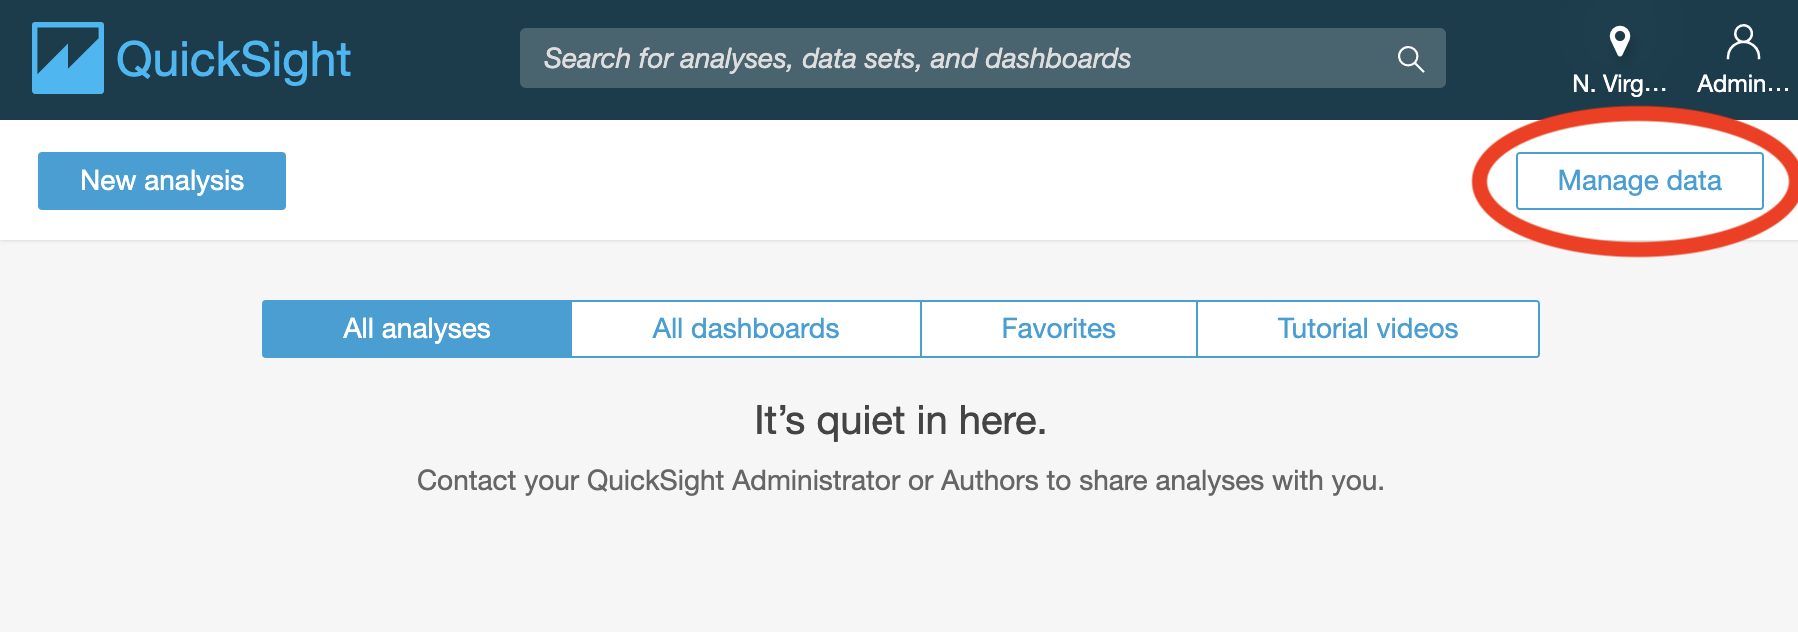 Amazon QuickSight   Manage data.